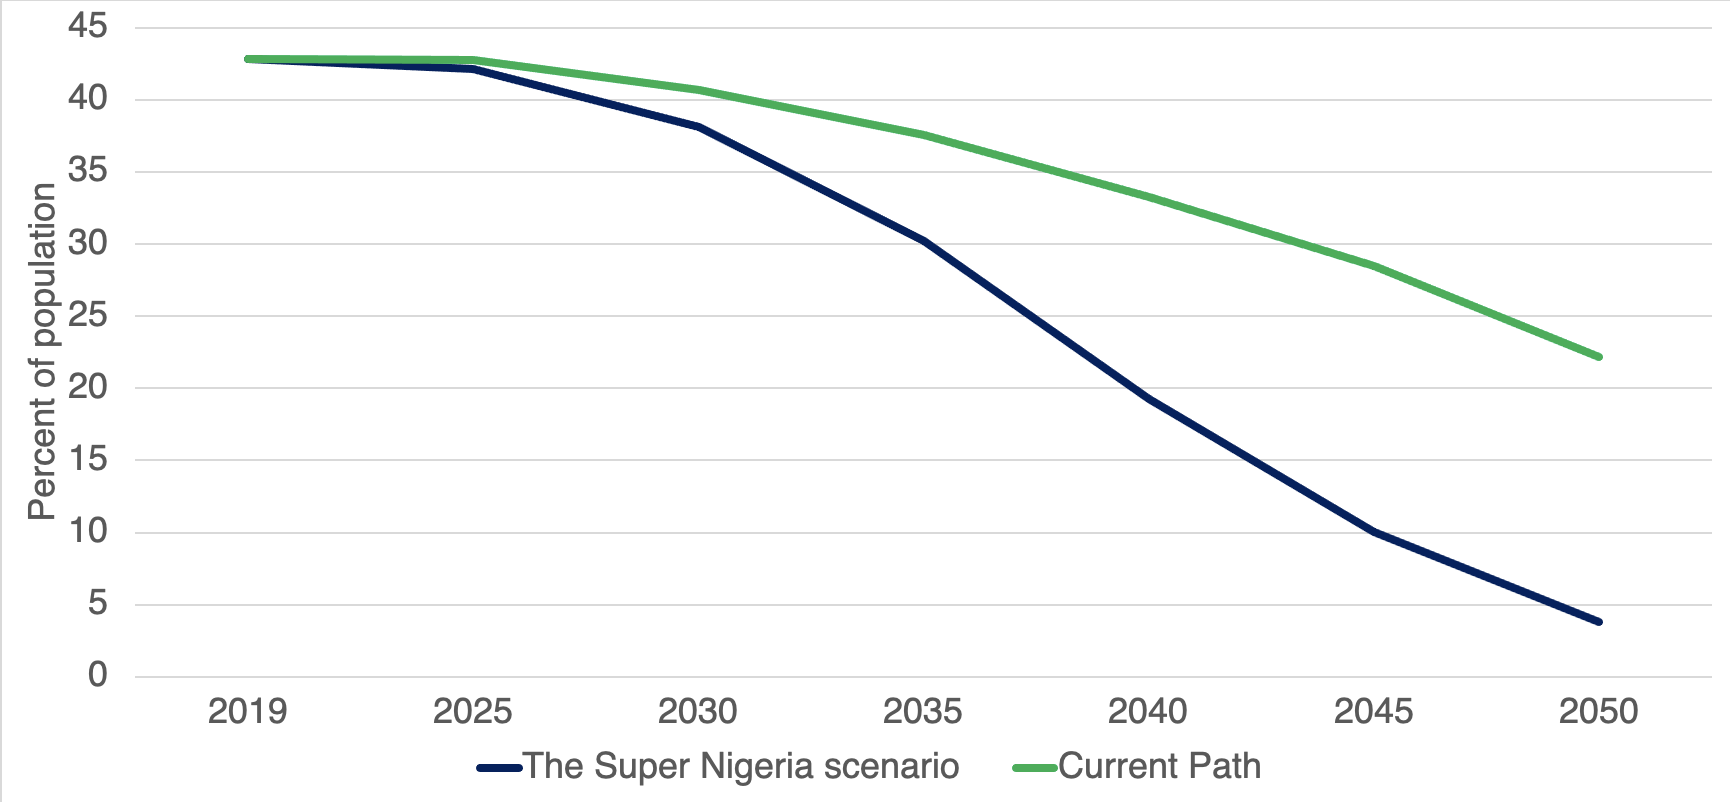 Chart 2: Extreme poverty at US$1.90 – Super Nigeria scenario vs Current Path